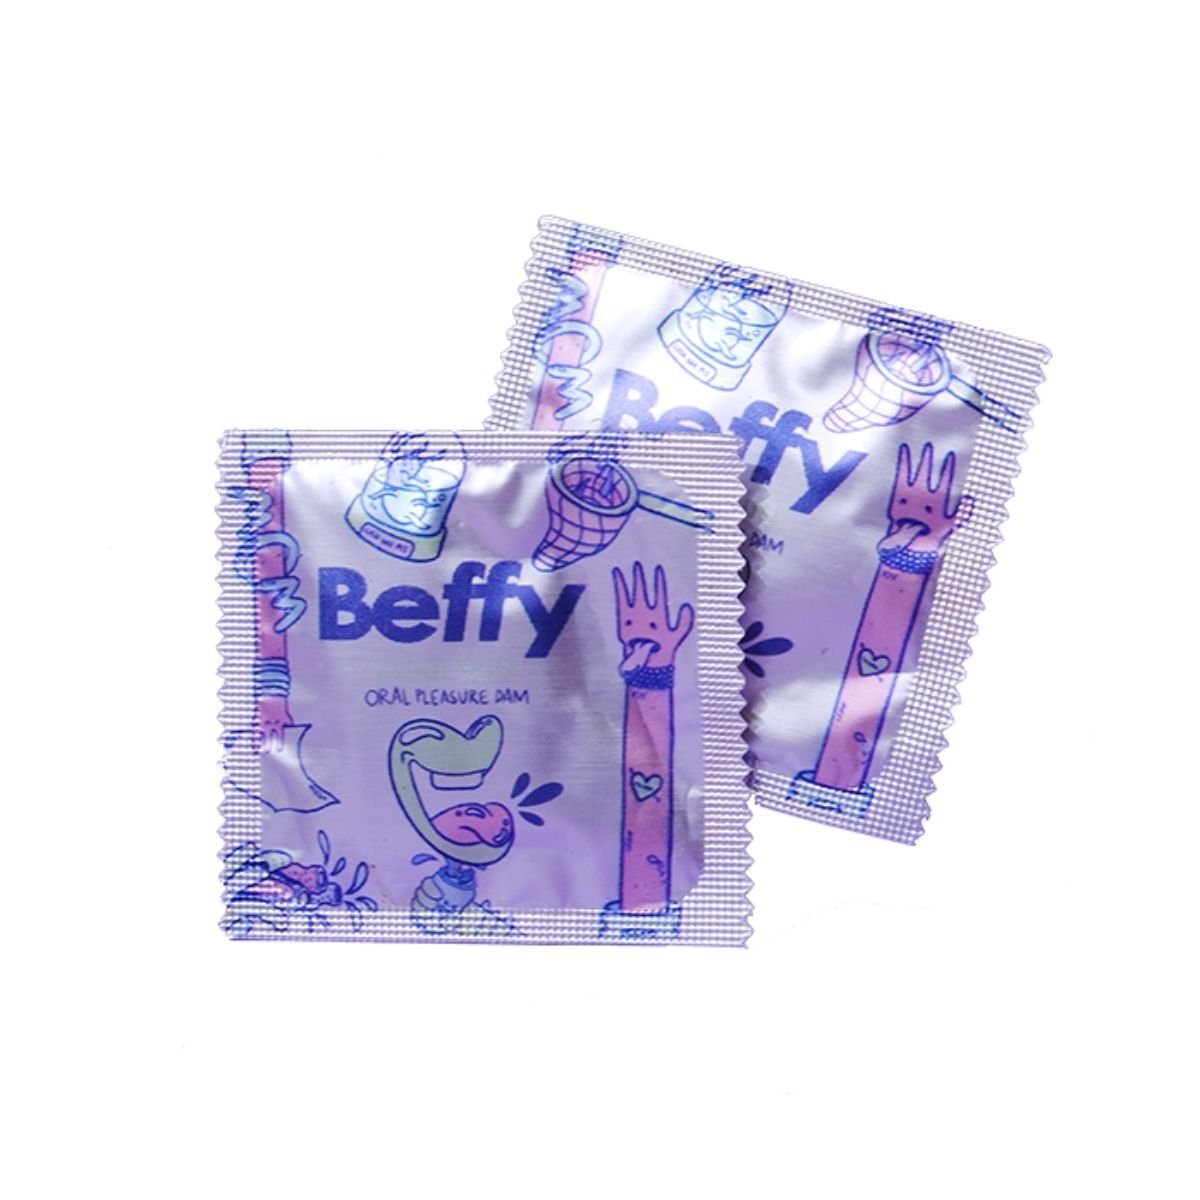 Empfohlene Produkte! Asha International Kondome Beffy St., Stk. Lickpads, 2 Ultra 1 Dünn